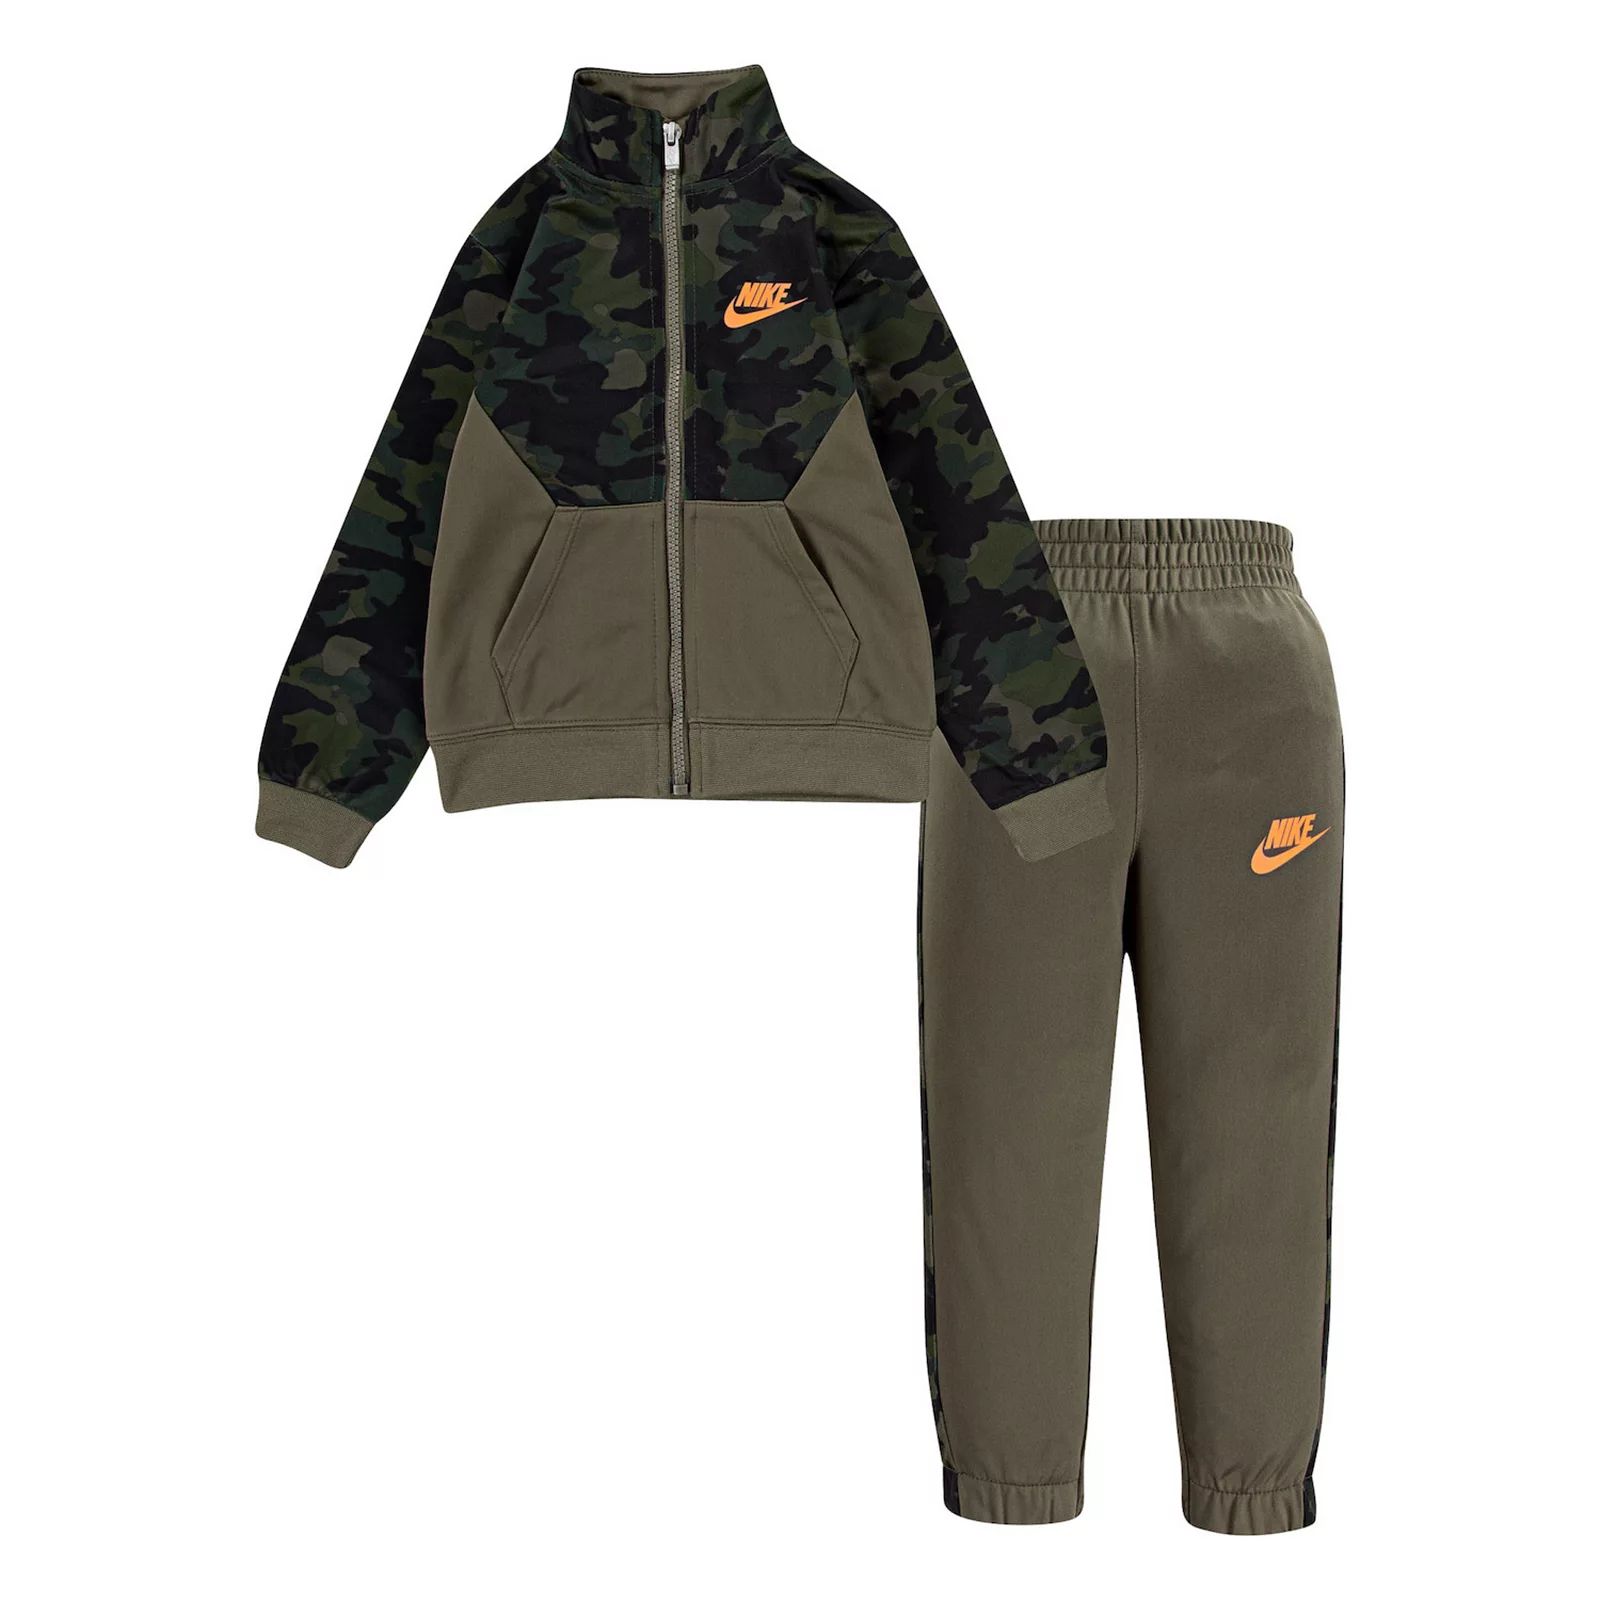 Toddler Boy Nike Camo Zip Track Jacket & Pants Set, Toddler Boy's, Size: 2T, Med Green | Kohl's